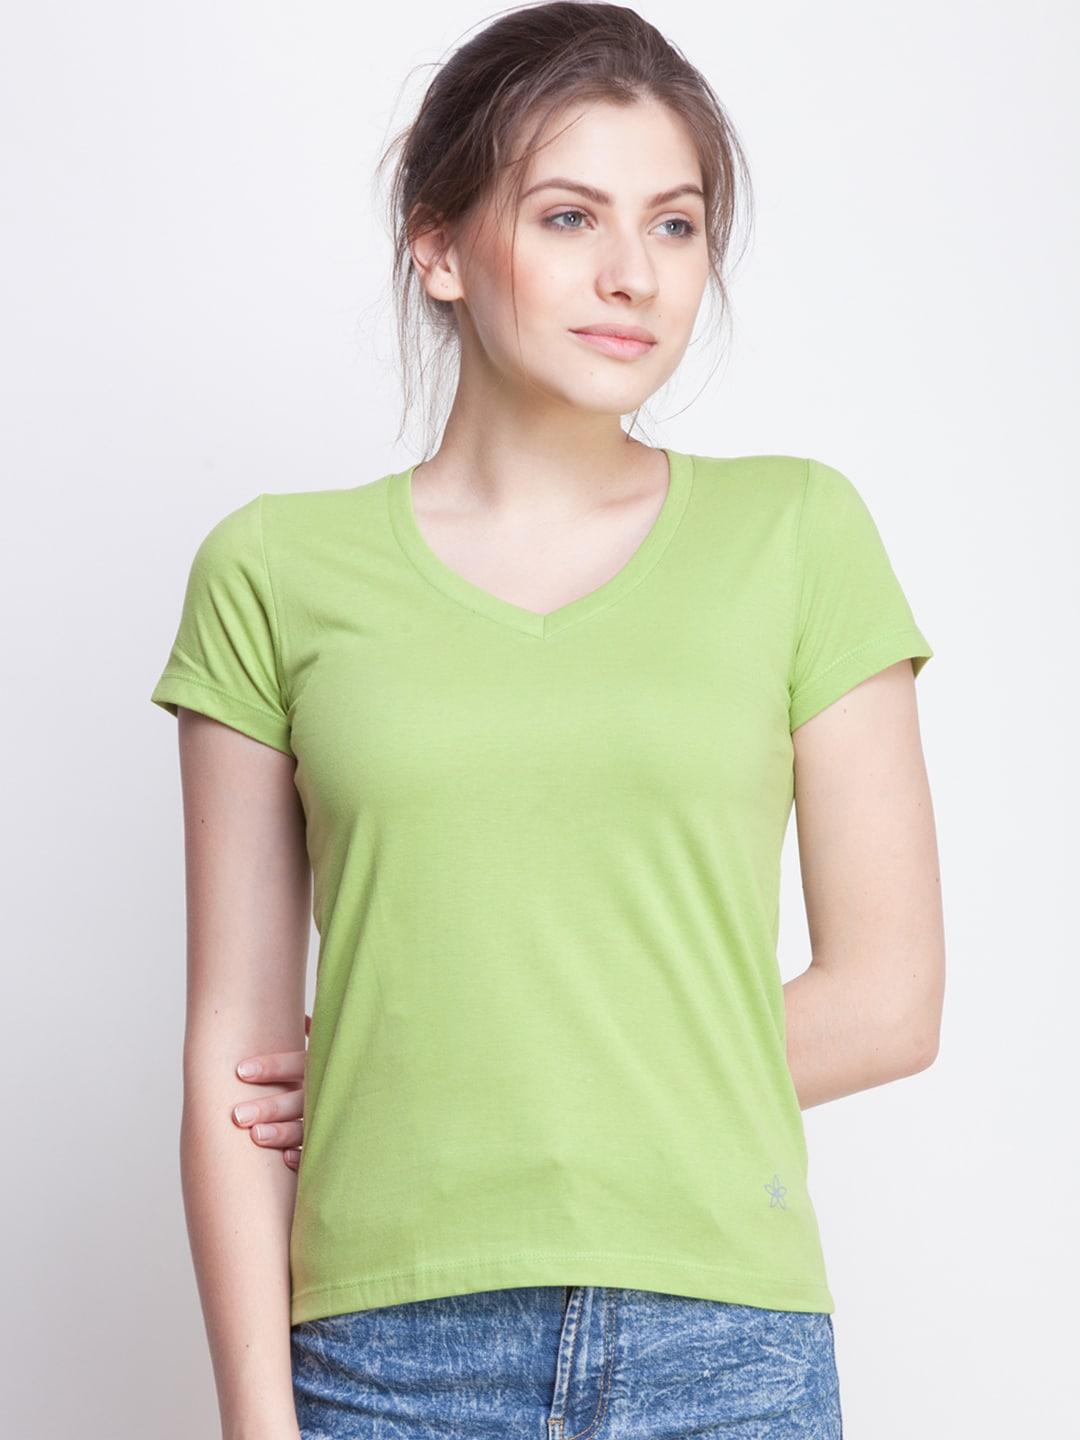 dollar-missy-women-green-solid-v-neck-t-shirt